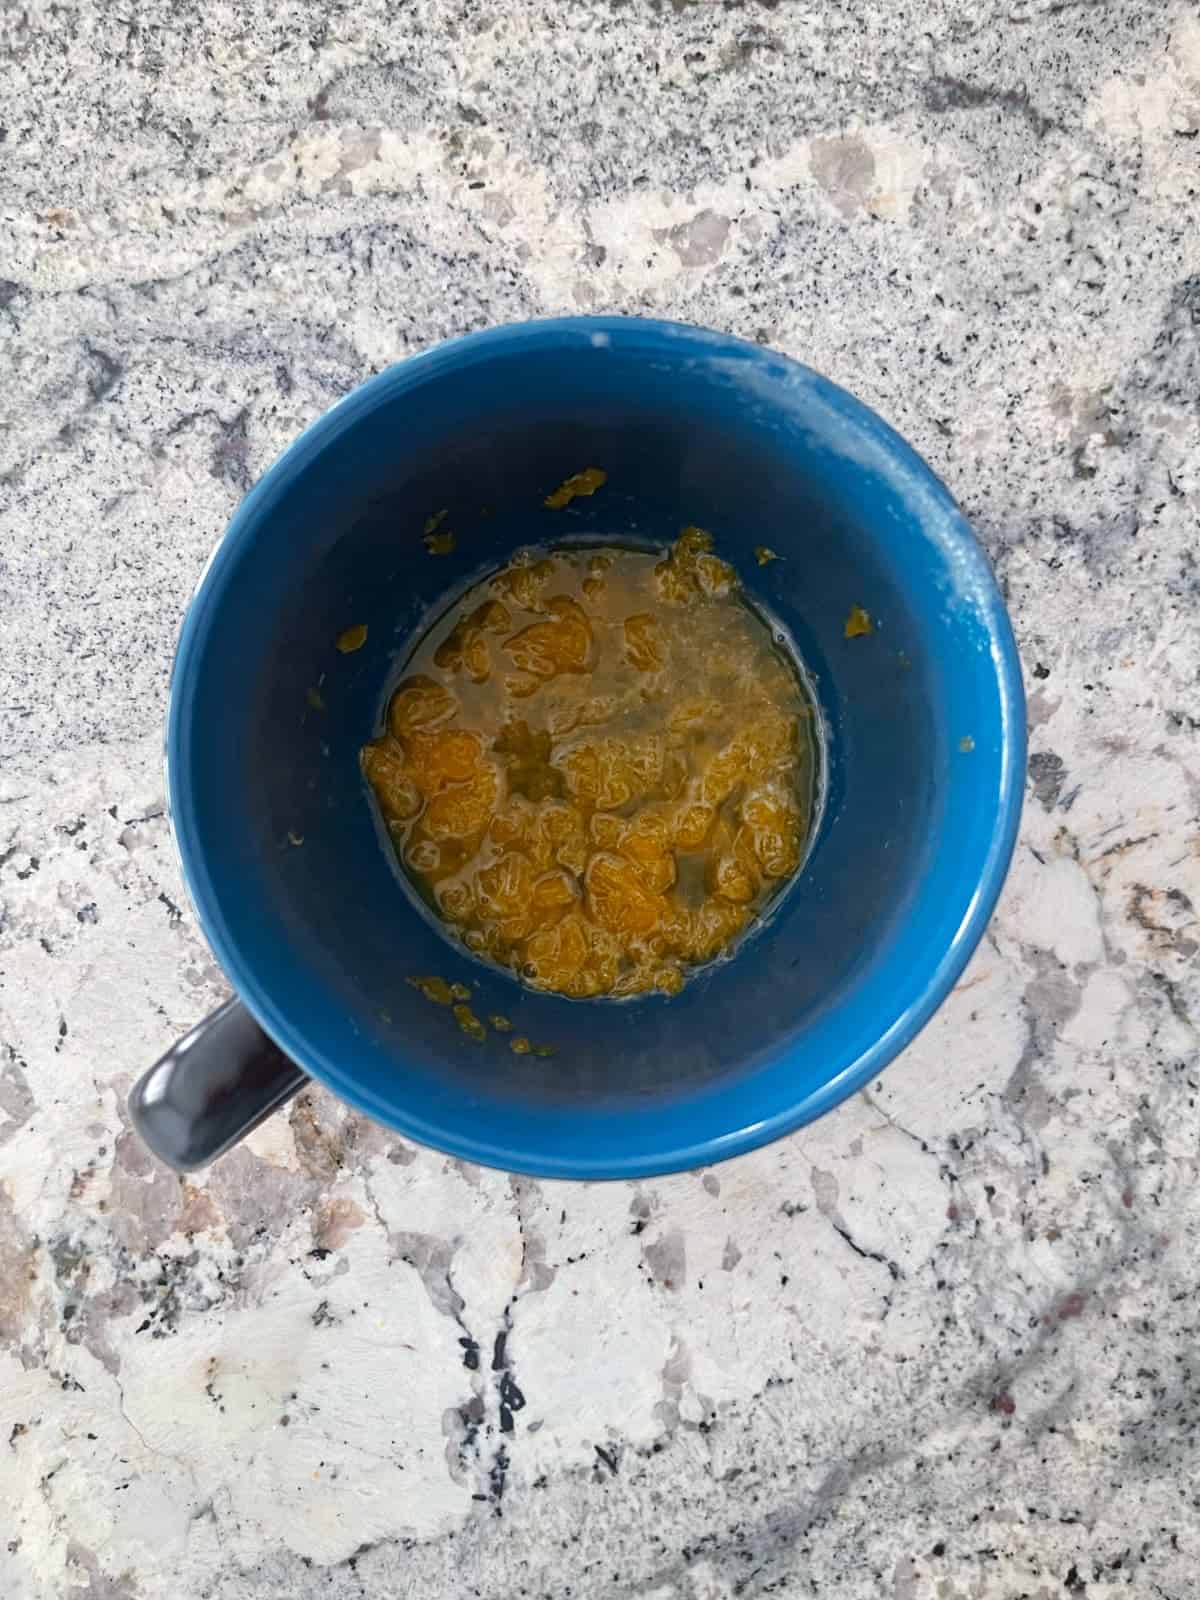 Mashed mandarin oranges in juice in blue mug on granite.